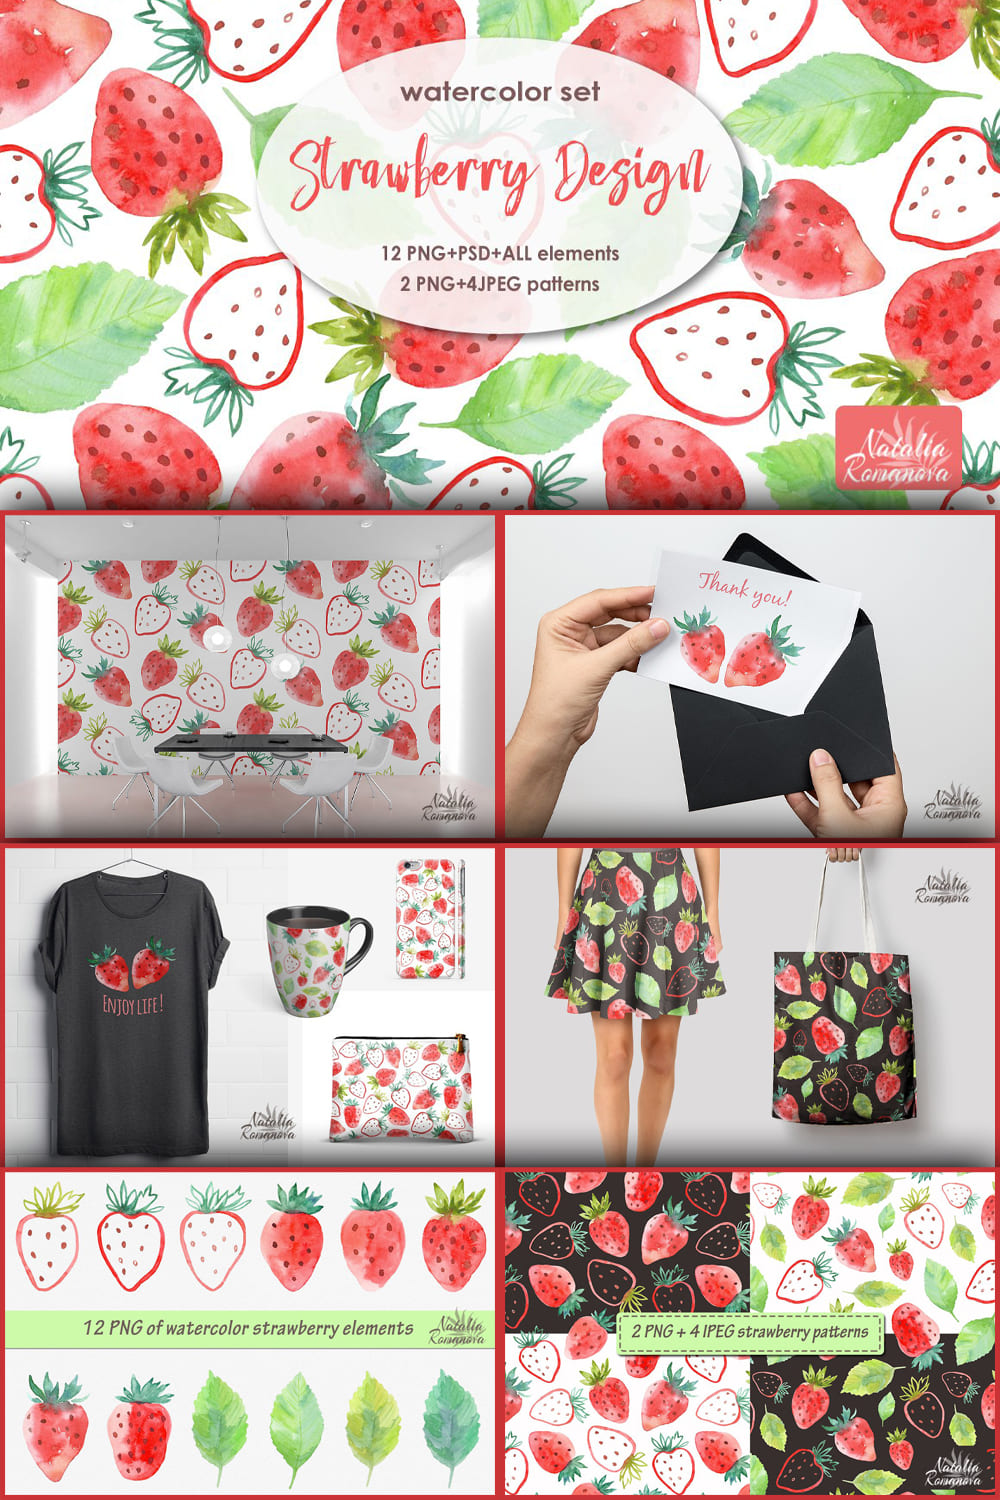 23310 strawberry watercolor design pinterest 1000 1500 6